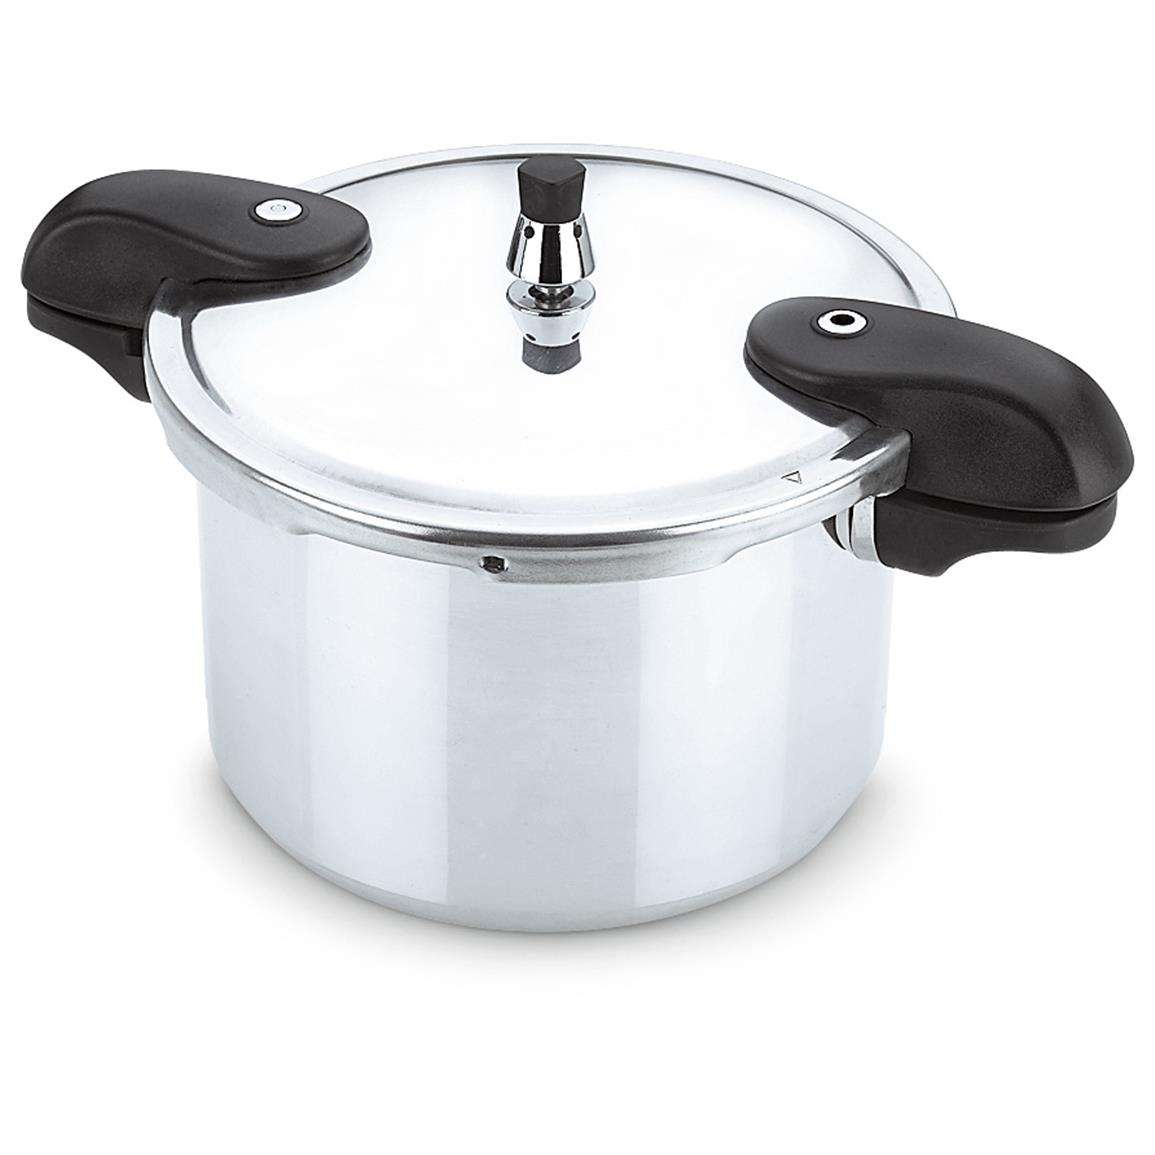 6-quart-aluminum-pressure-cooker-611579-canning-at-sportsman-s-guide